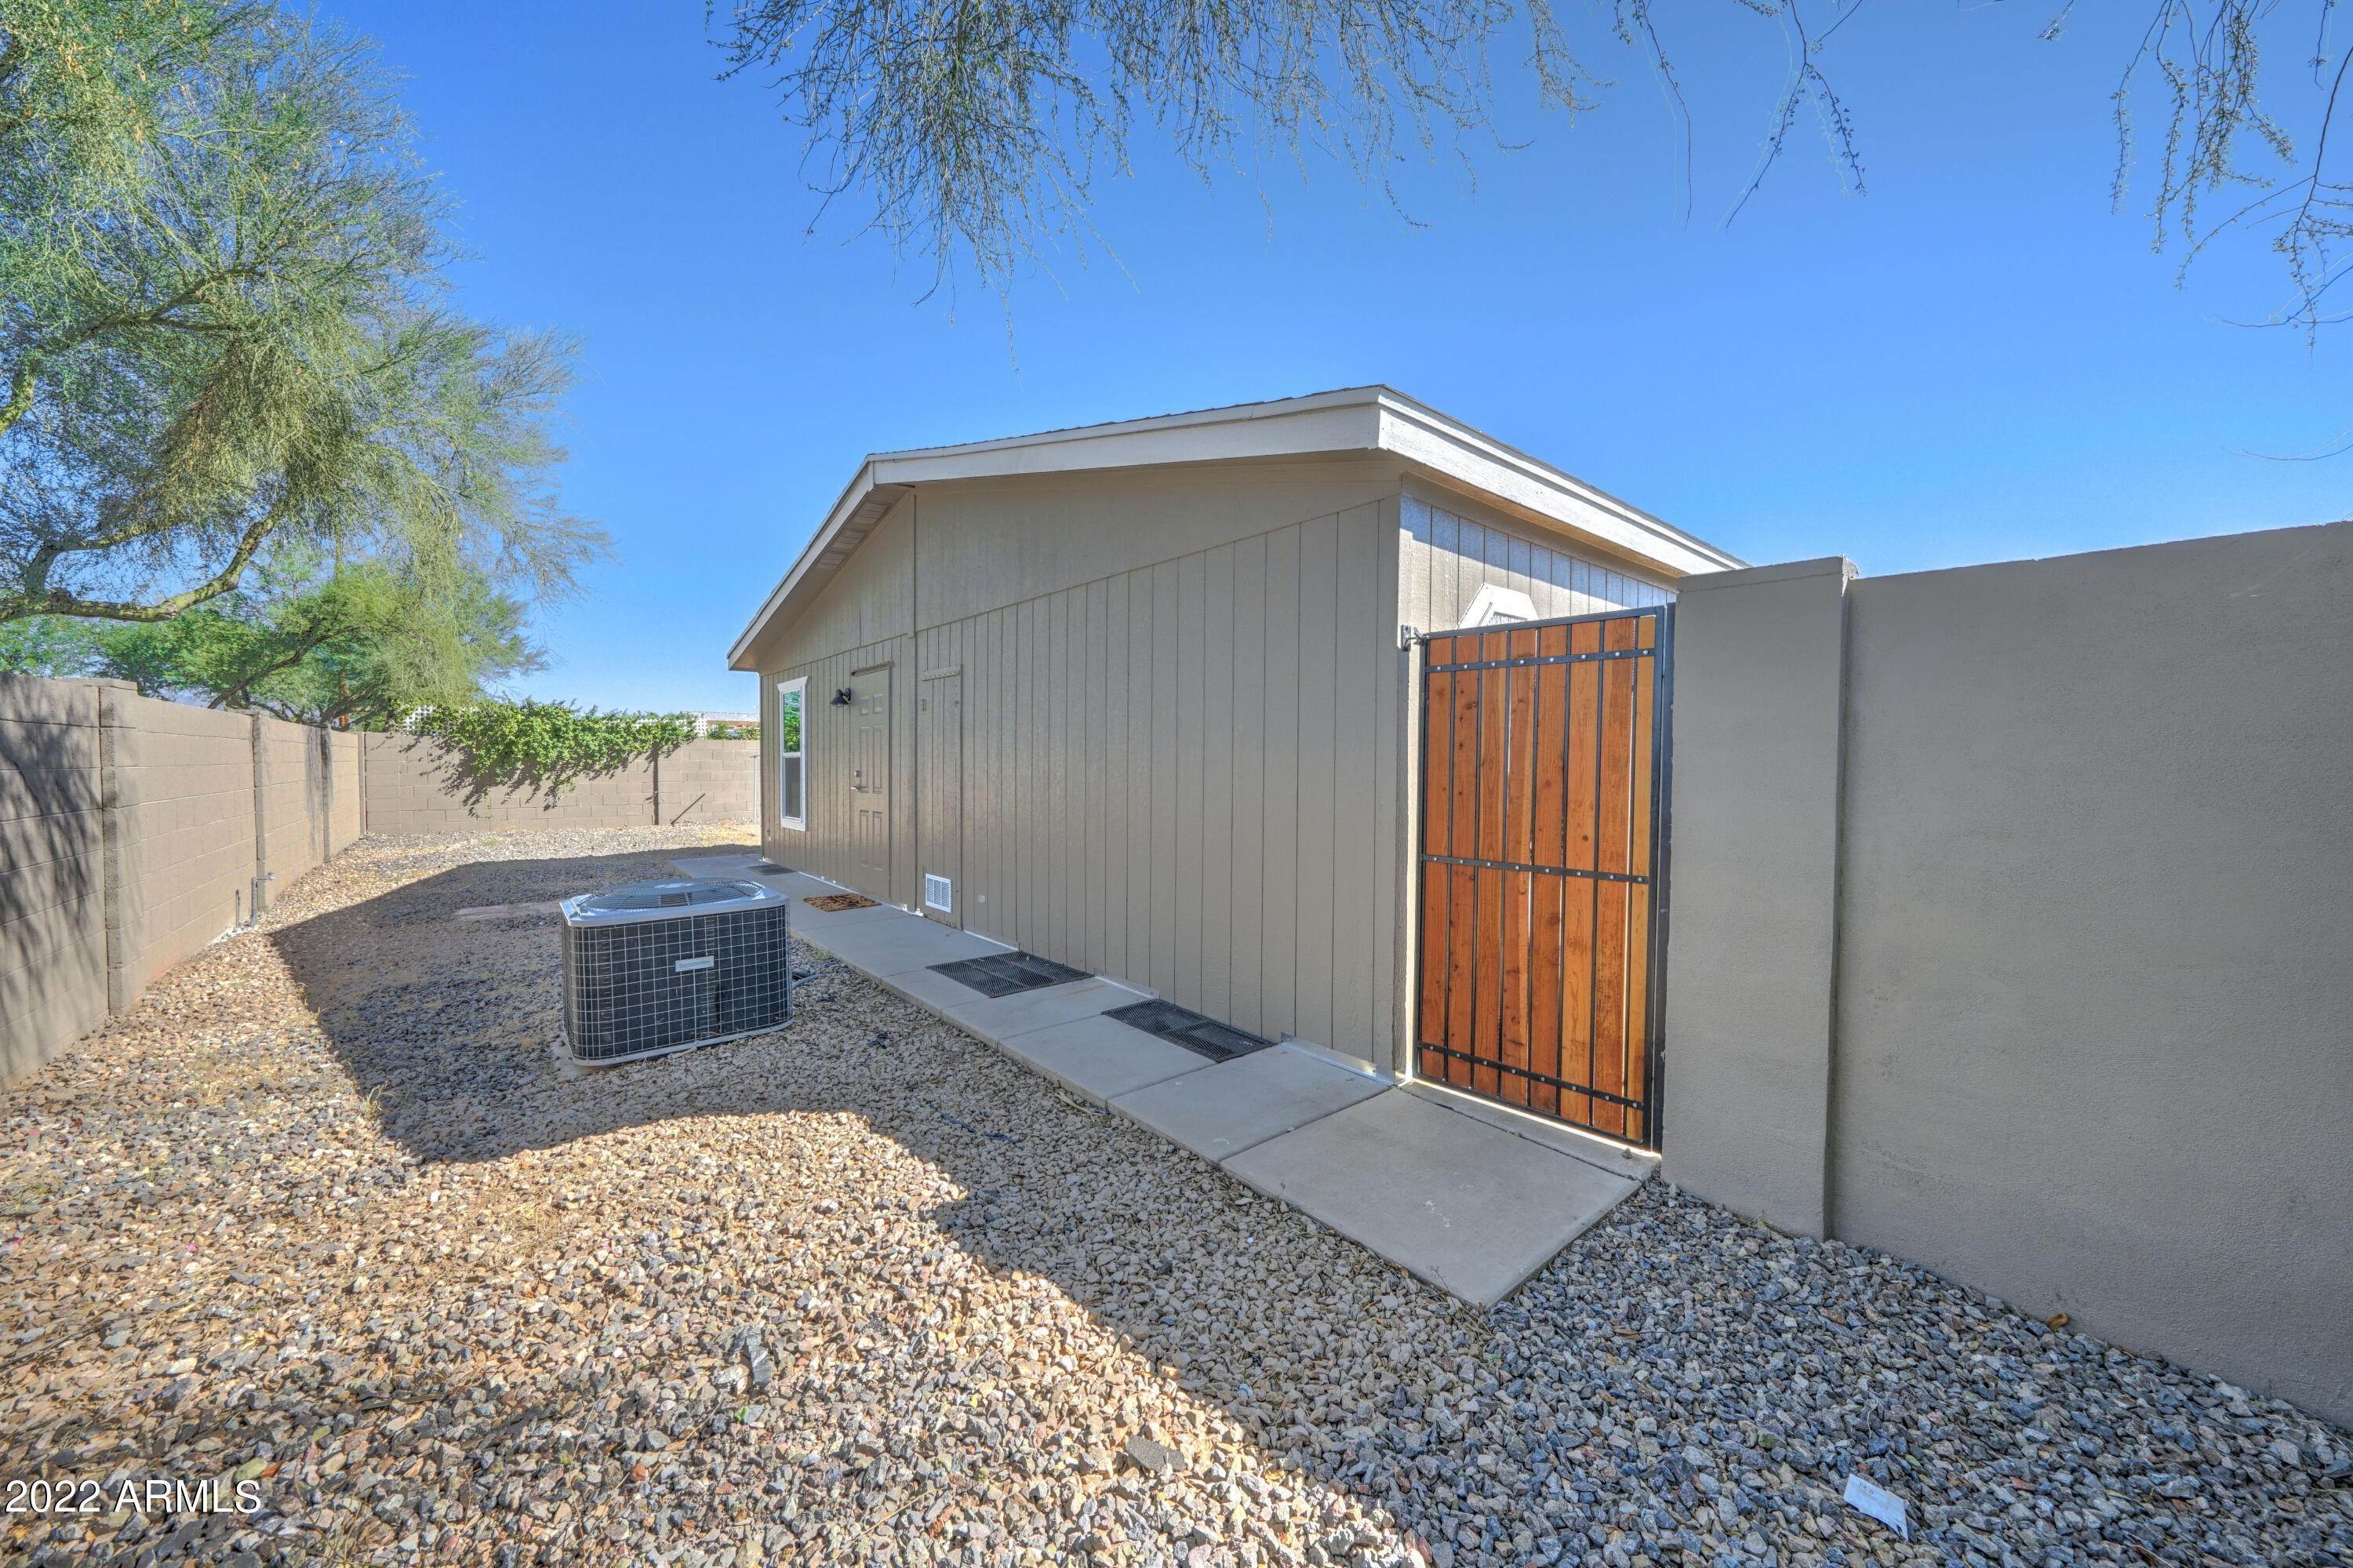 33. Mobile Home for Sale at Mesa, AZ 85208